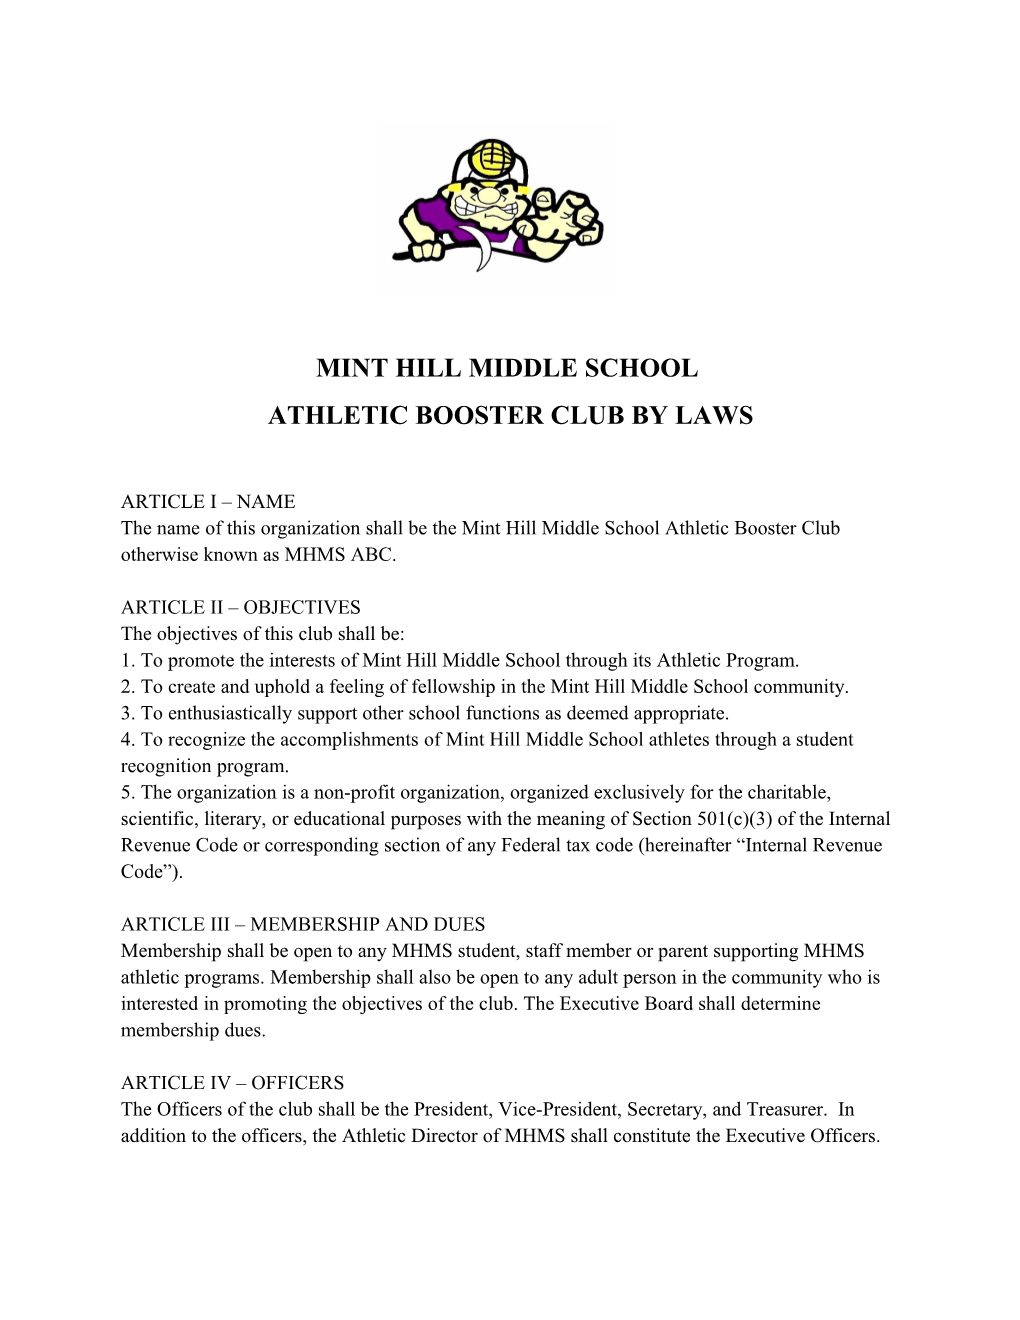 Mint Hill Middle School